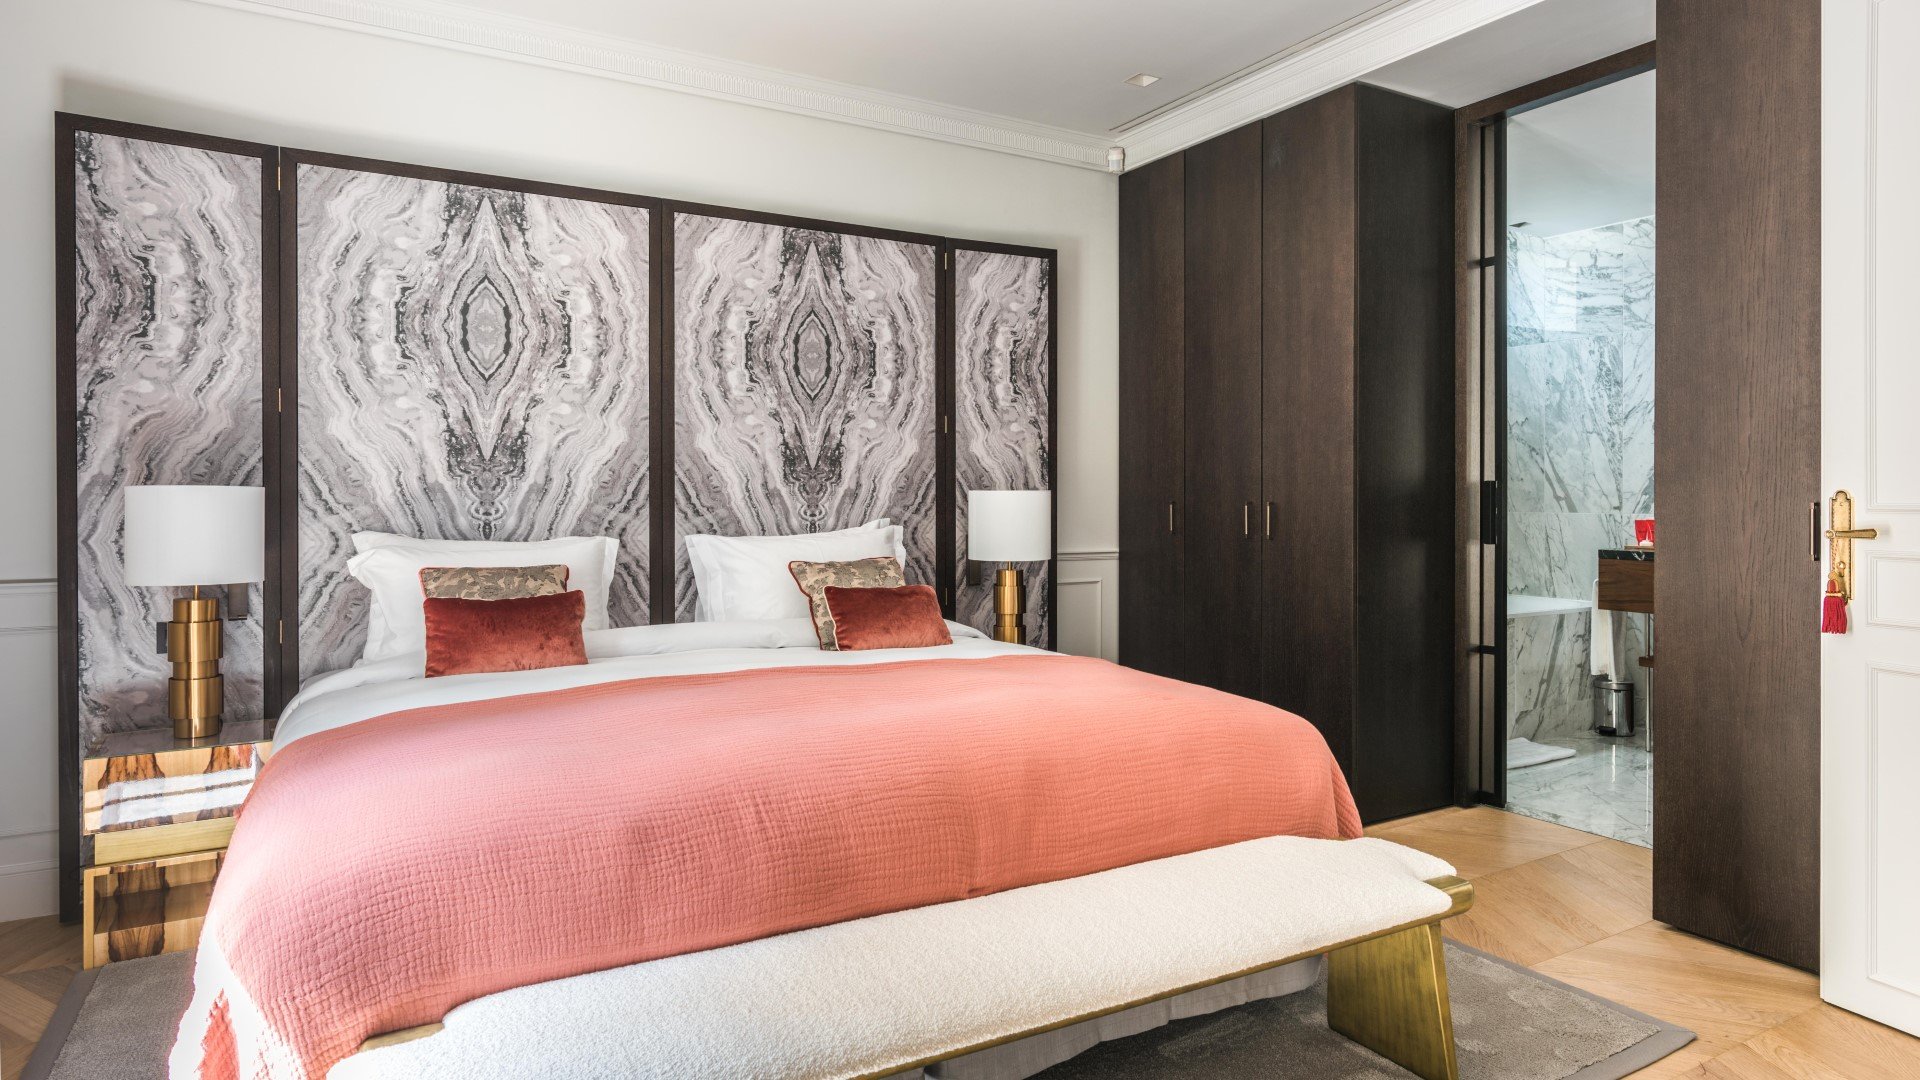 Master bedroom of the luxury home Homanie Paris Mandel, luxury home Paris